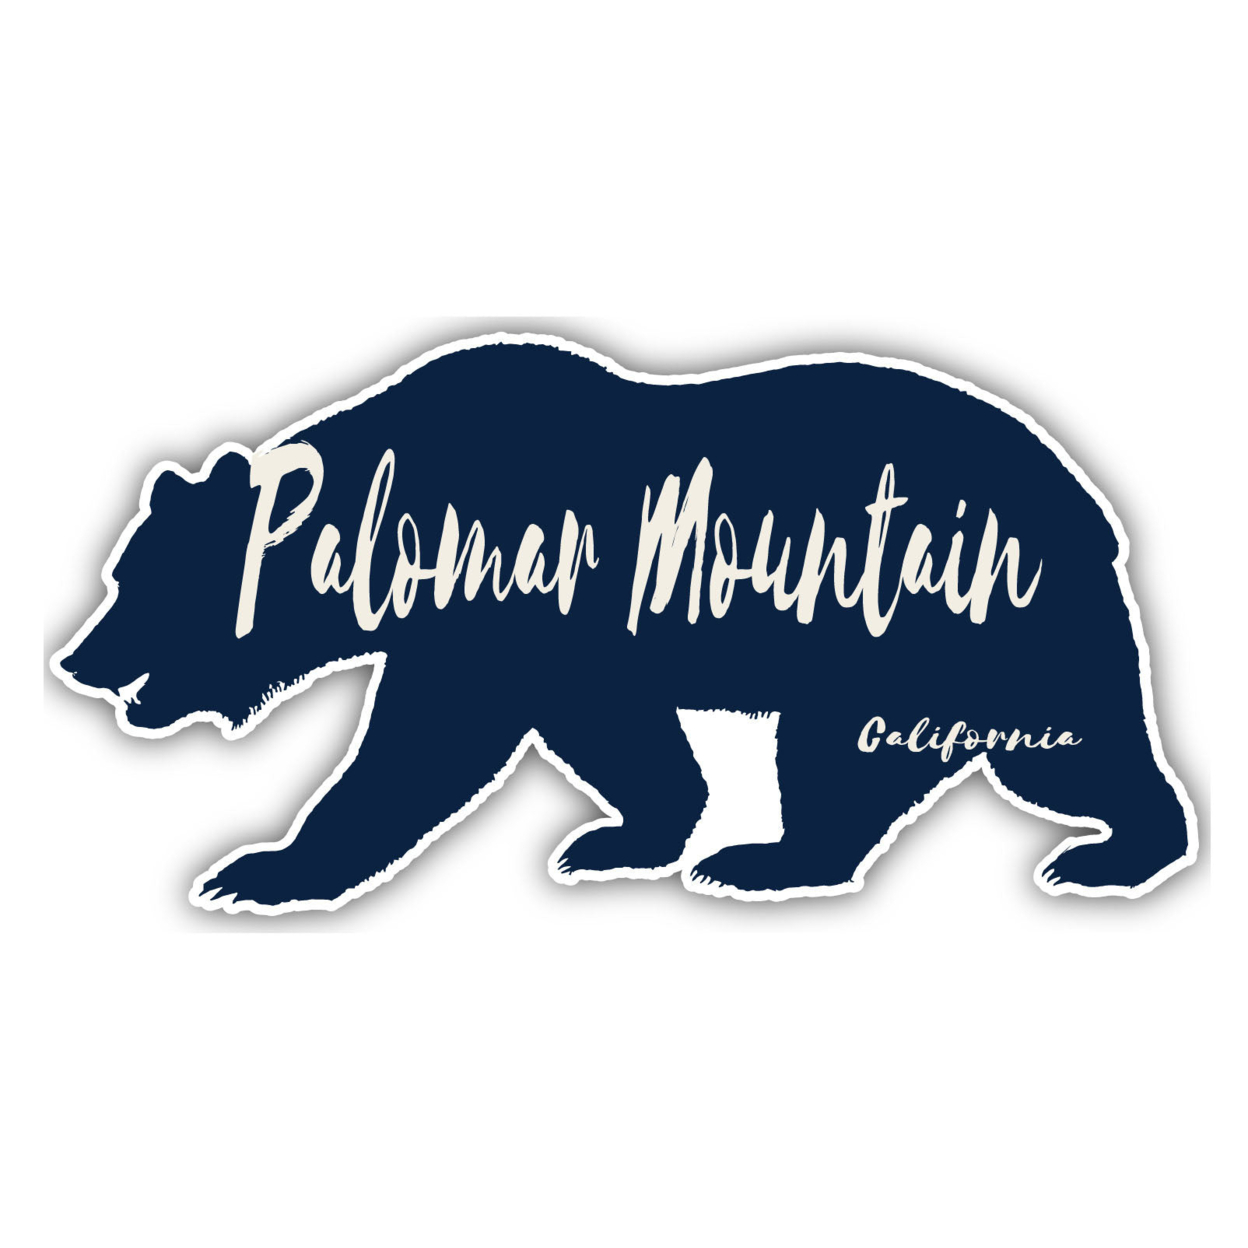 Palomar Mountain California Souvenir Decorative Stickers (Choose Theme And Size) - Single Unit, 2-Inch, Tent